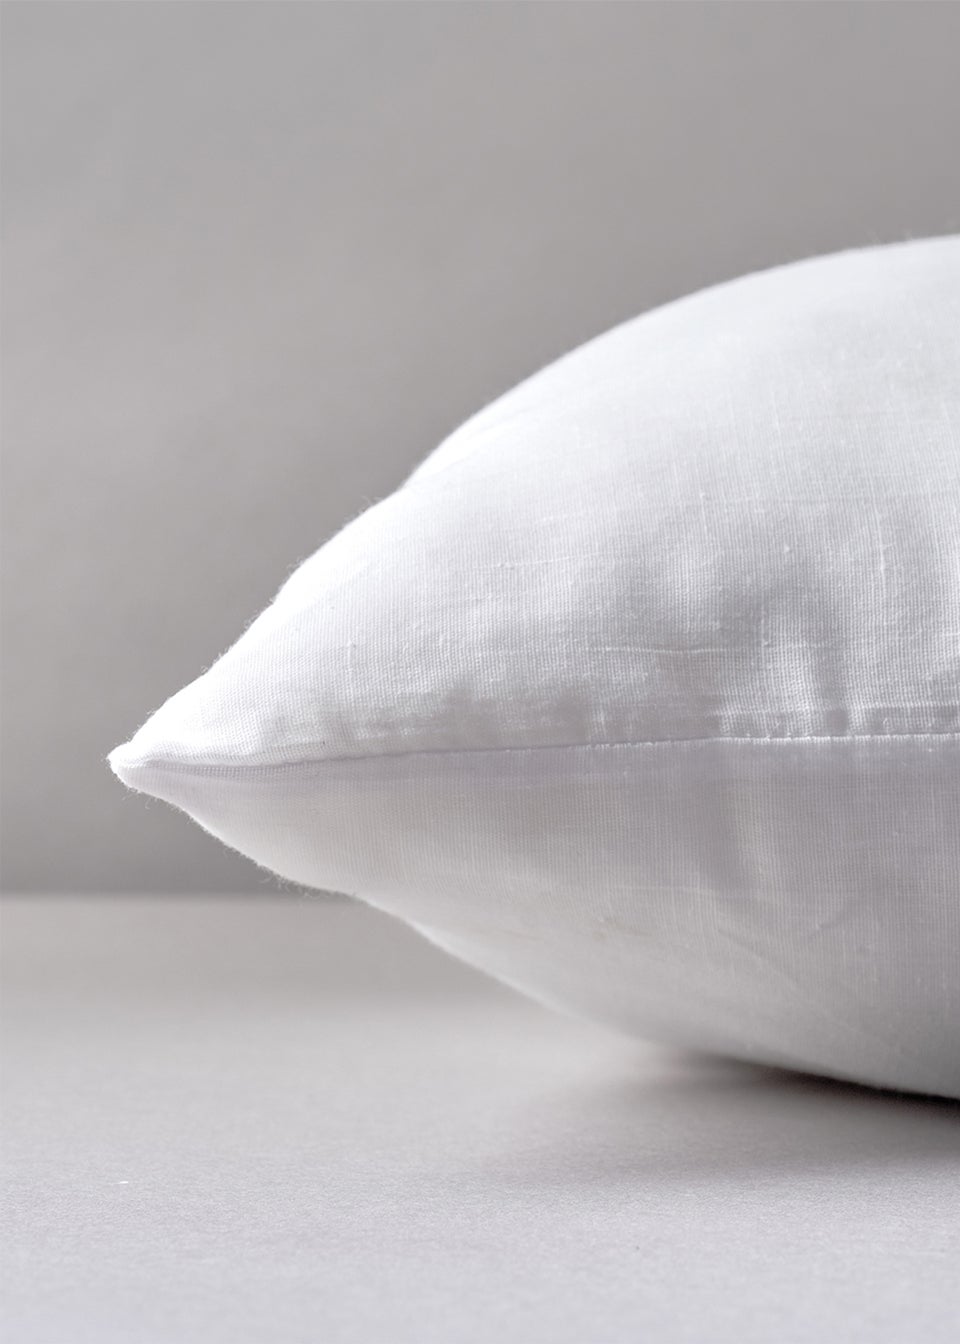 Slumberdown Anti Snore Pillow